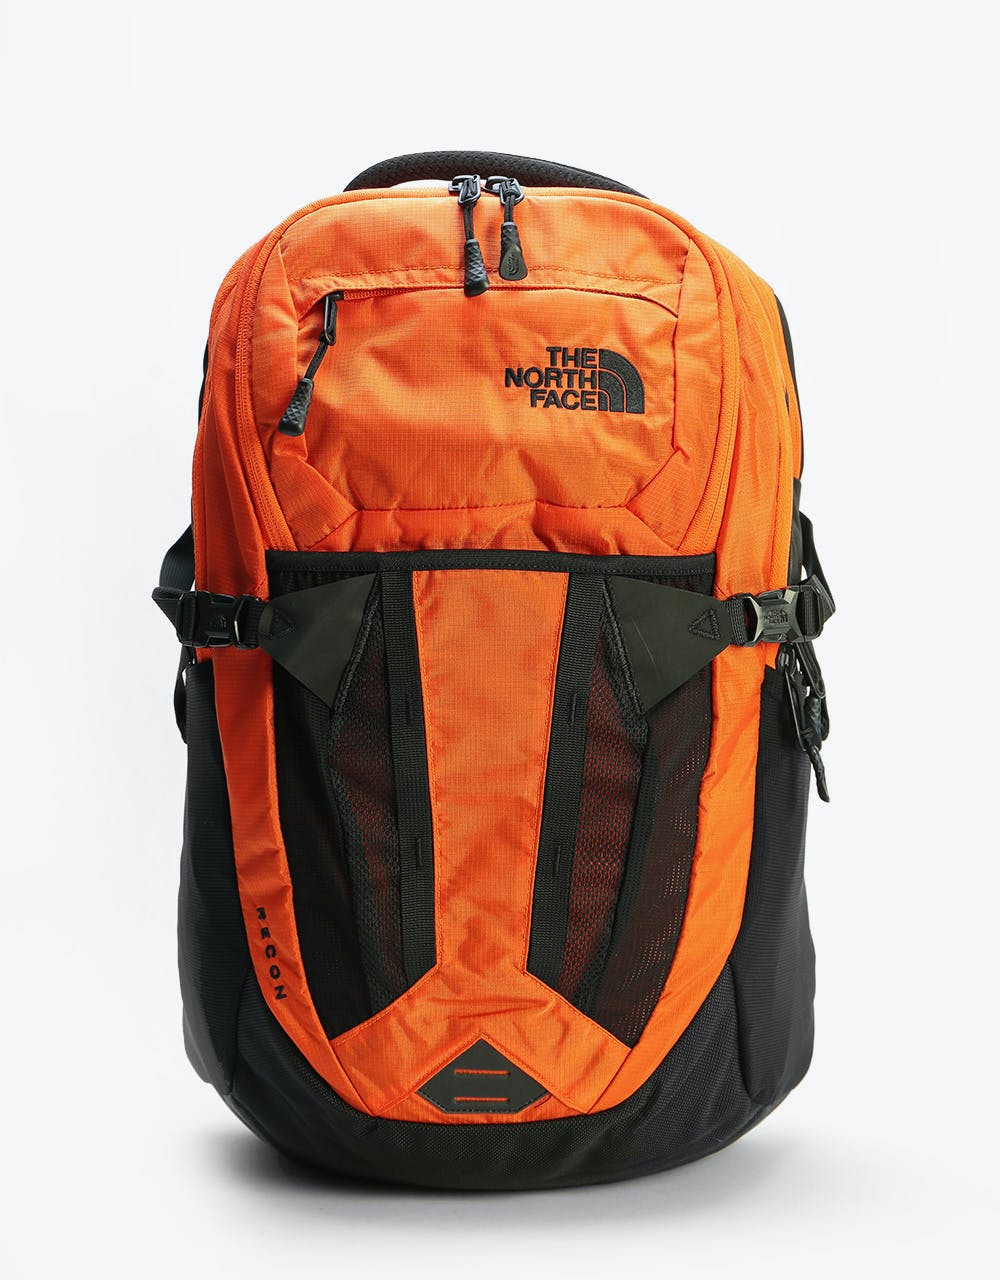 The North Face Recon Backpack - Persian Orange Ripstop/TNF Black